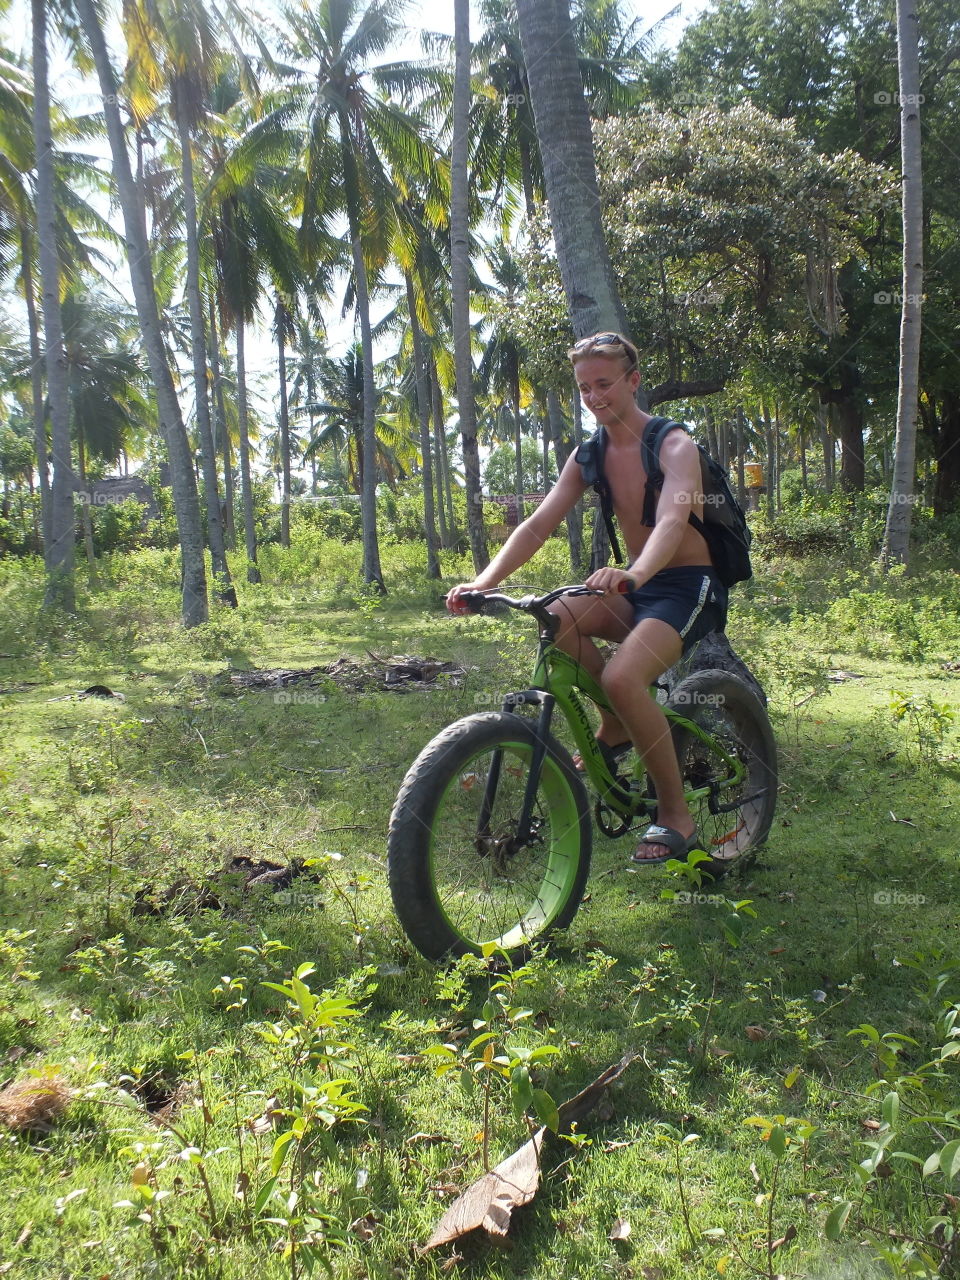 Gili island bike riding